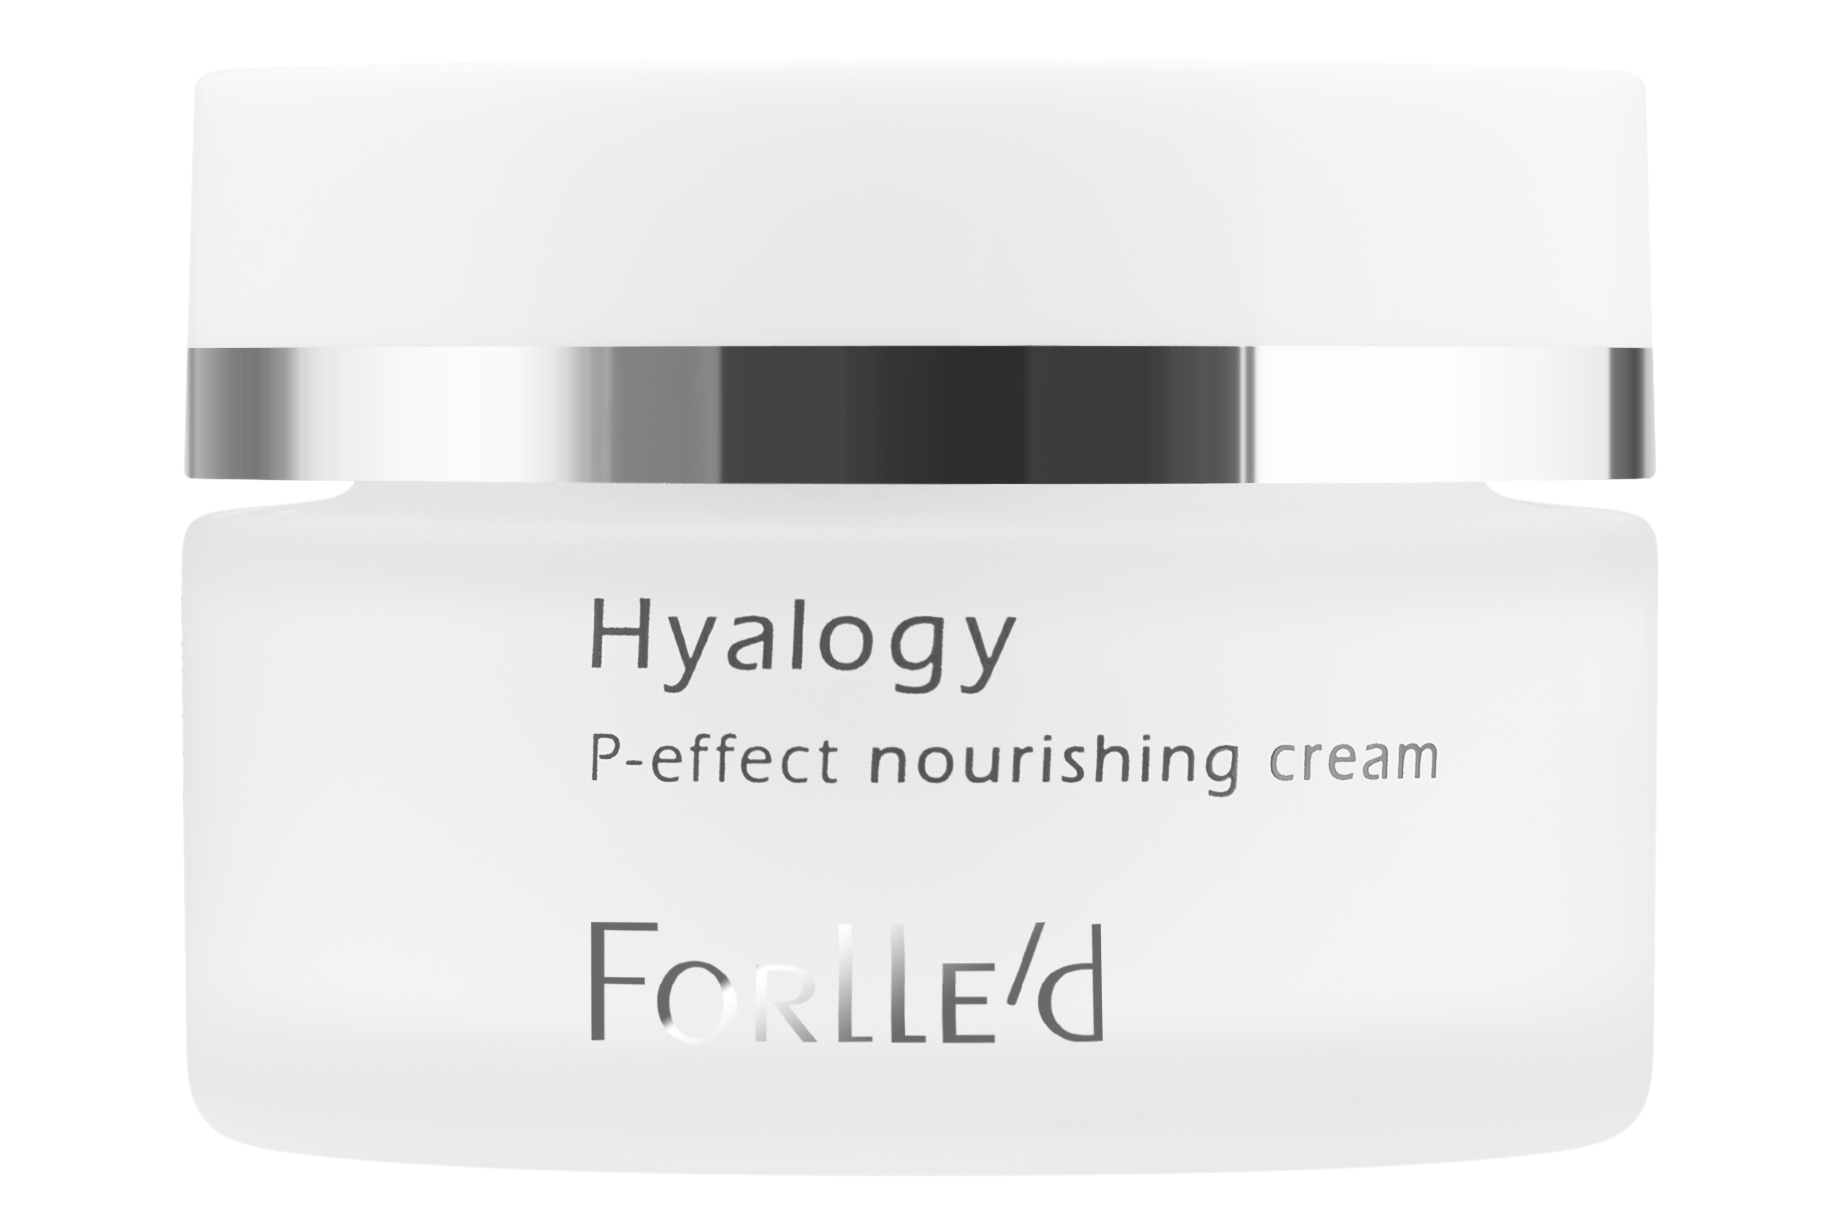 Hyalogy P-effect nourishing cream 